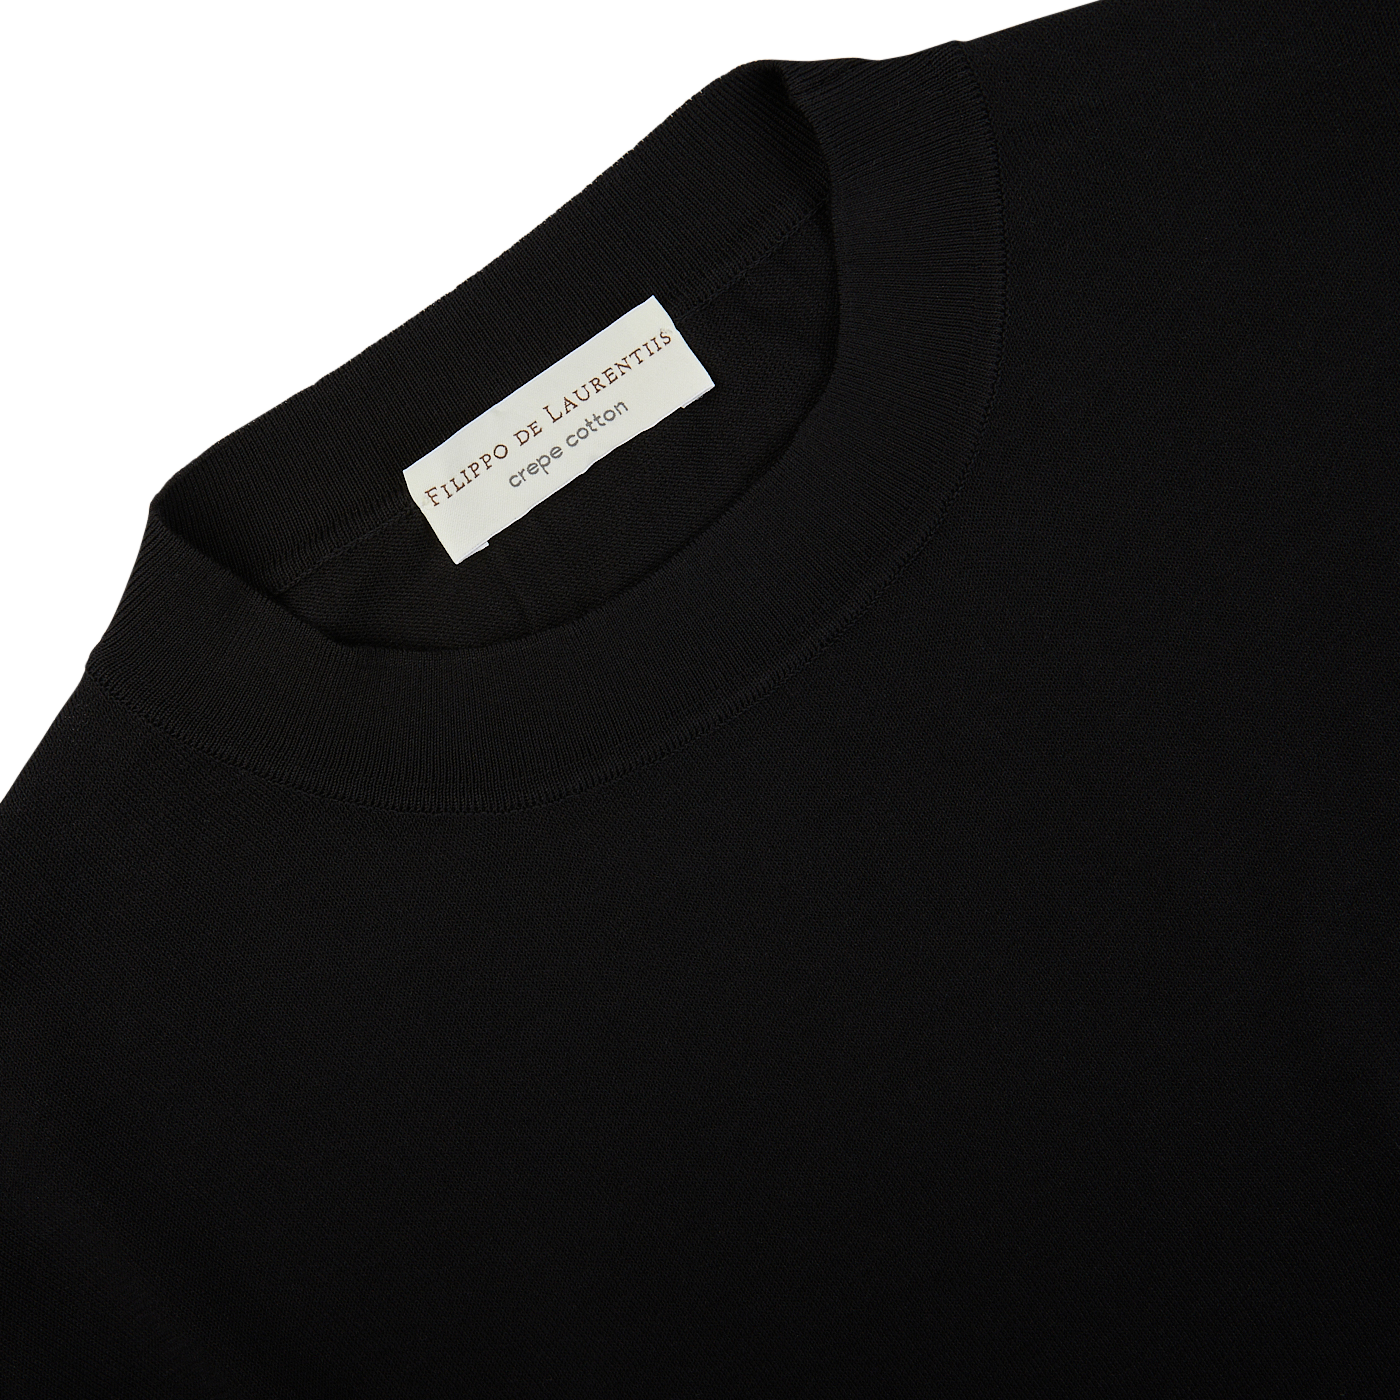 A black crepe cotton oversized t-shirt with a white label by Filippo de Laurentiis.